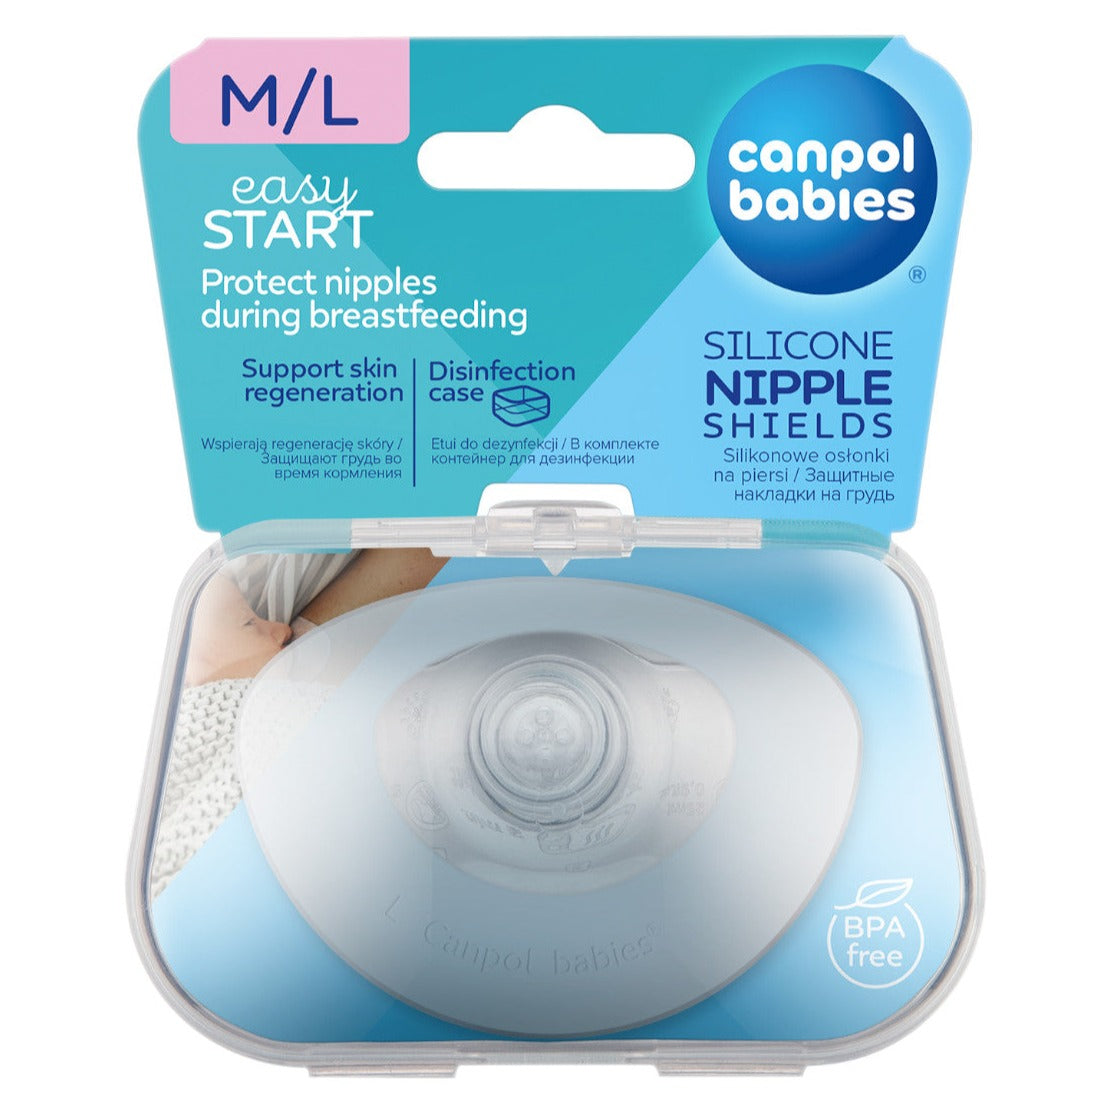 Canpol Babies: Easystart m/l silicone breast casings M/L 2 pcs.